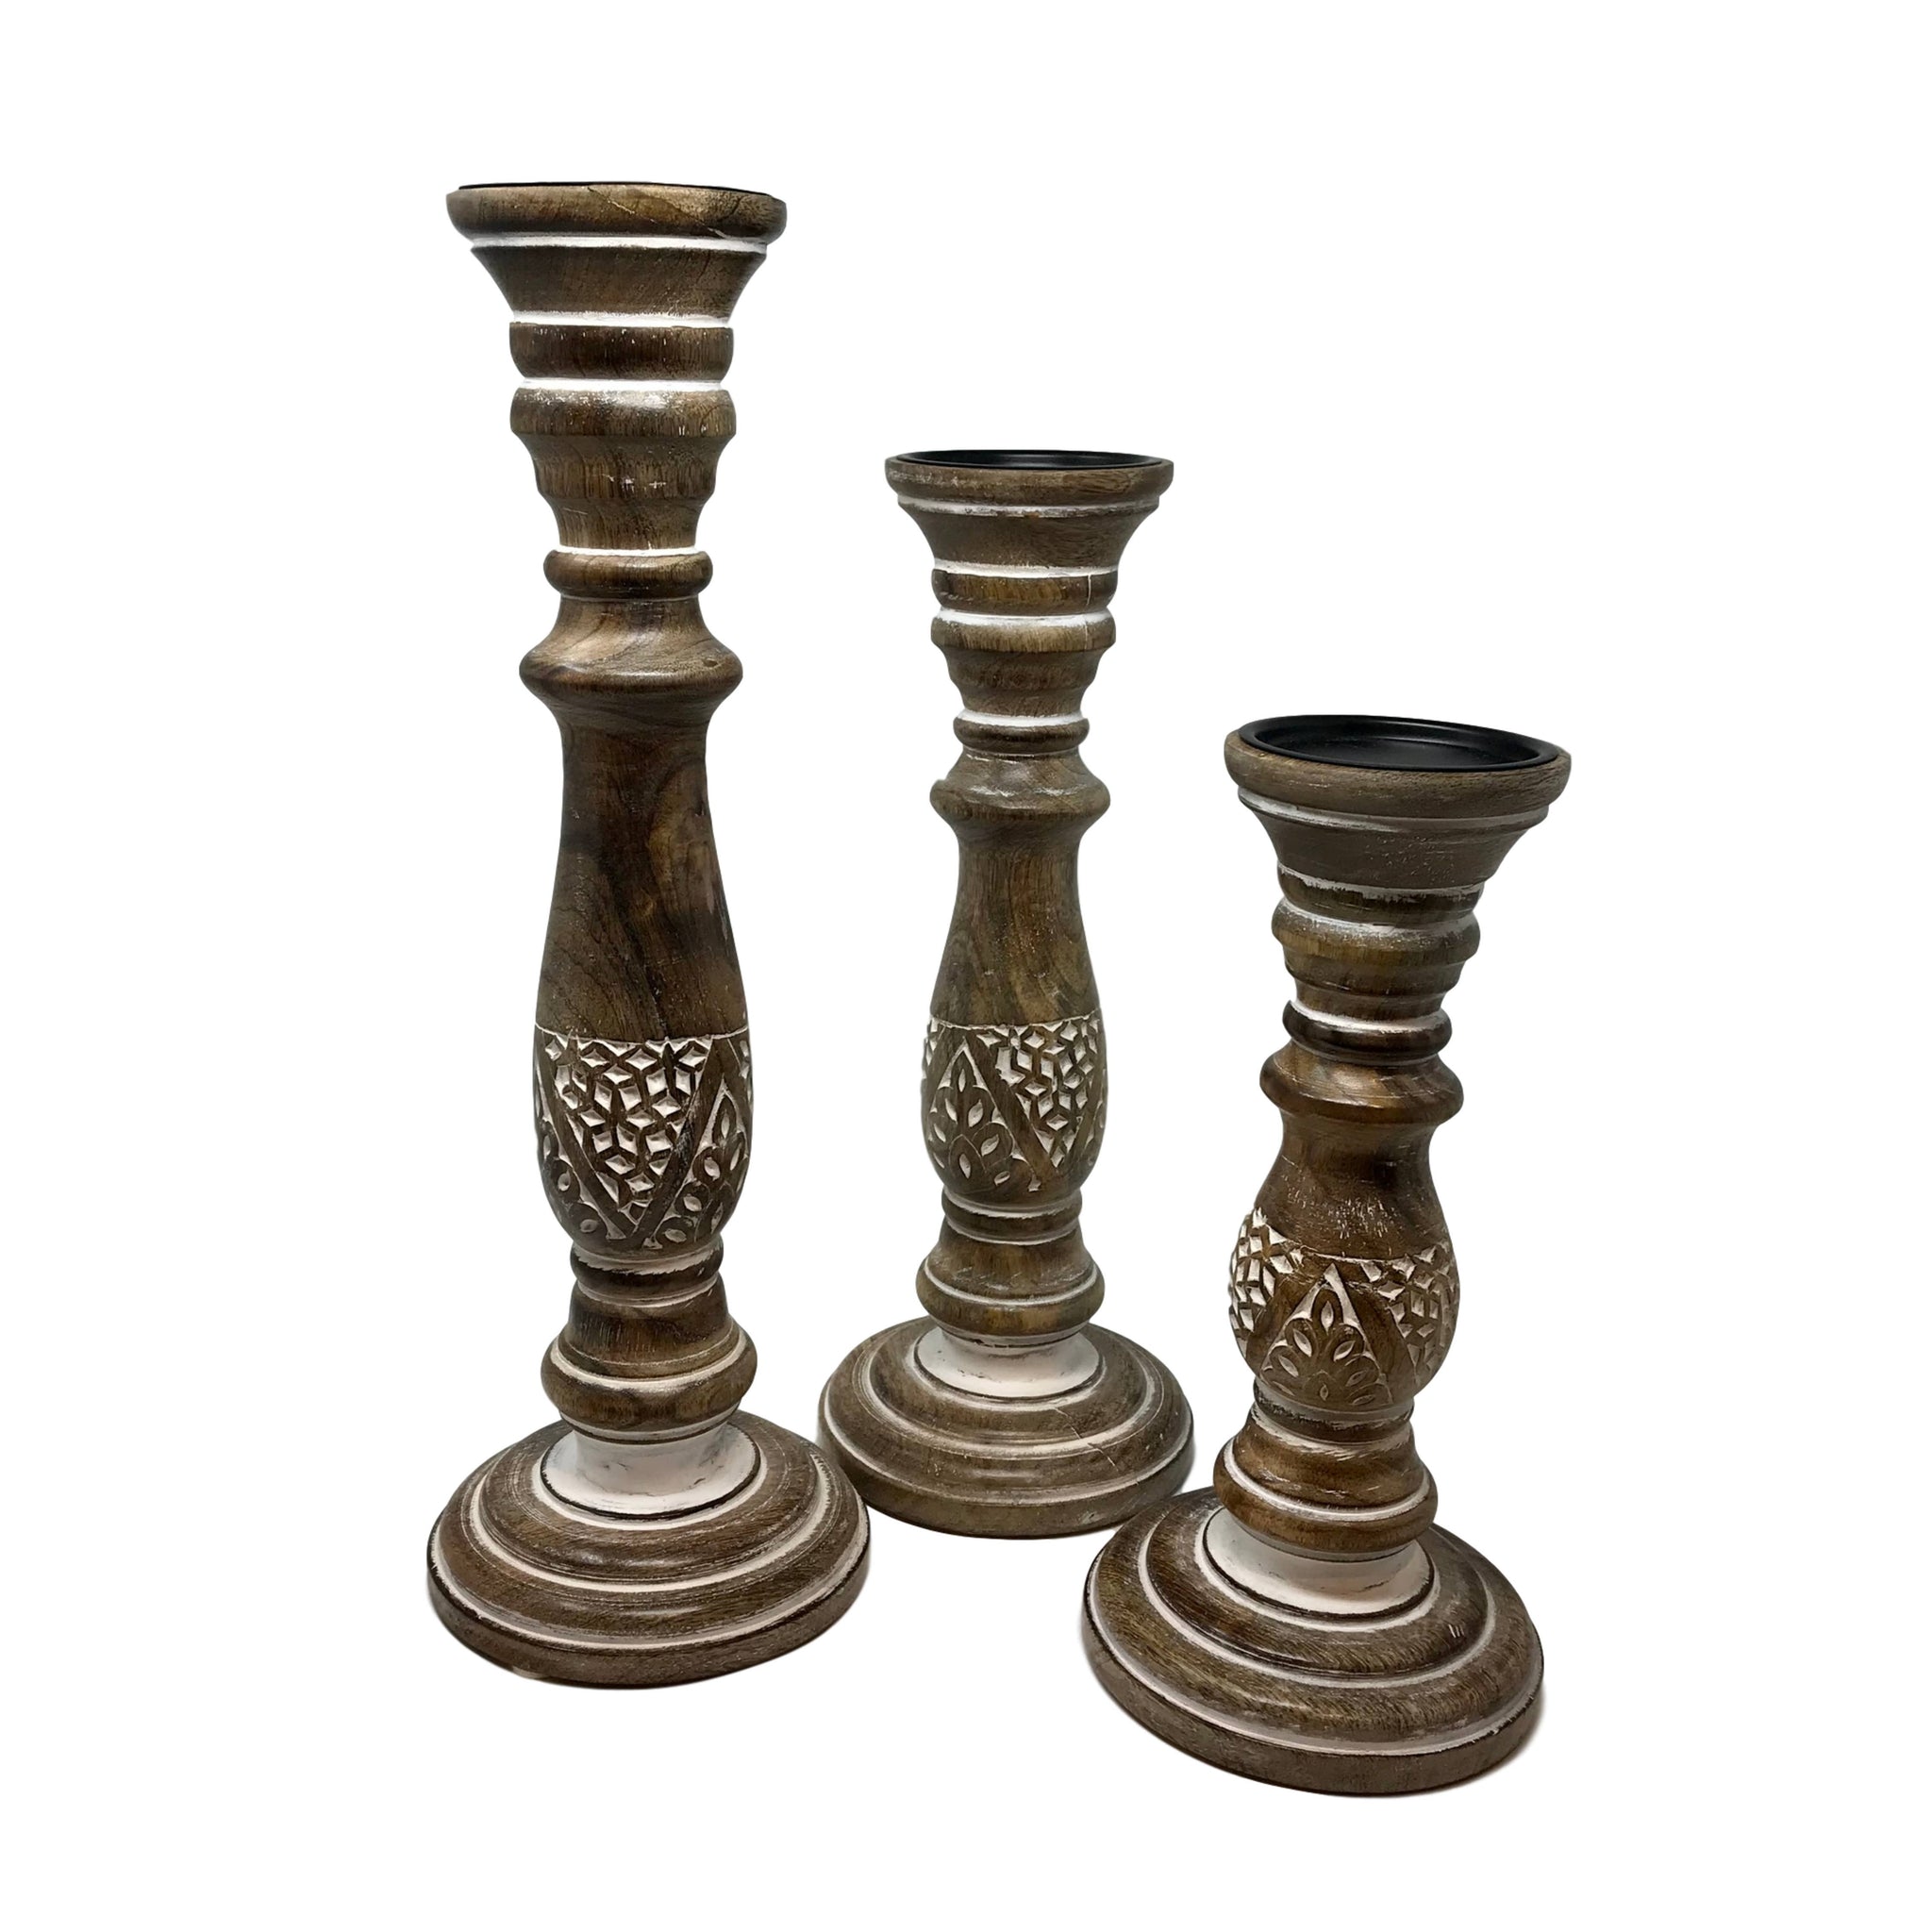 Set of 3 Fern Design Hand-Carved Wood Candle Holders